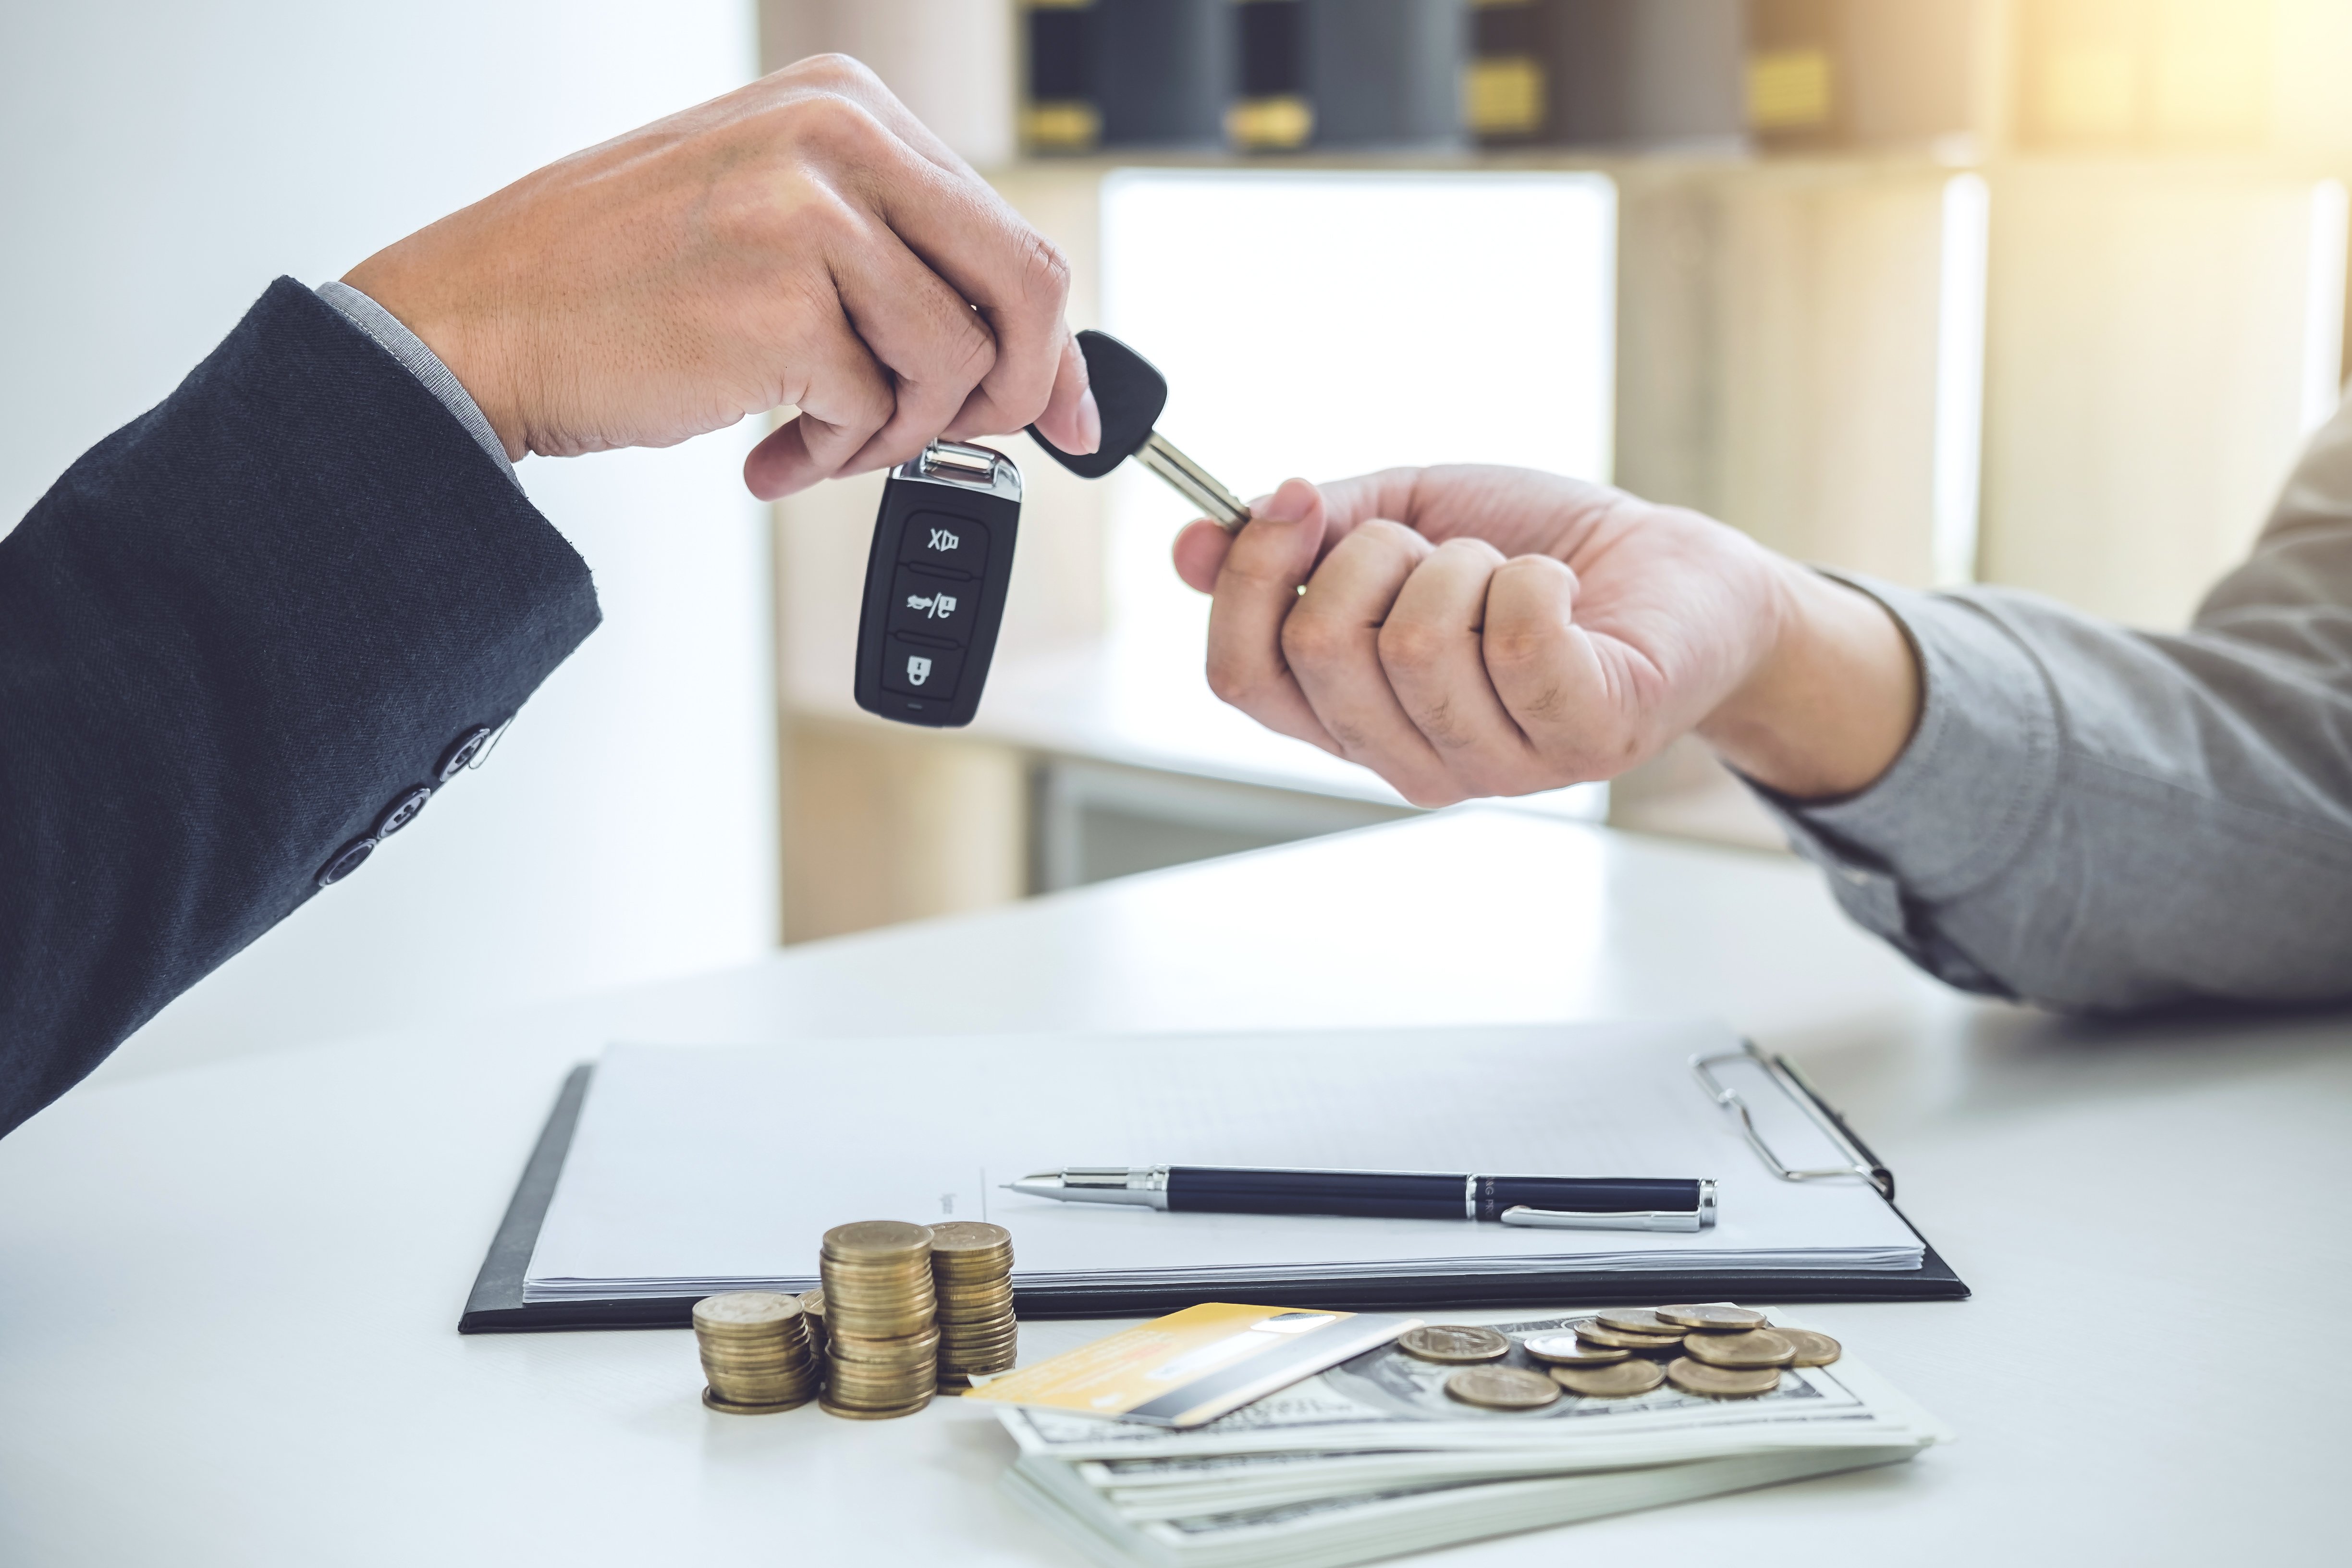 salesman-send-key-customer-after-good-deal-agreement-successful-car-loan-contract